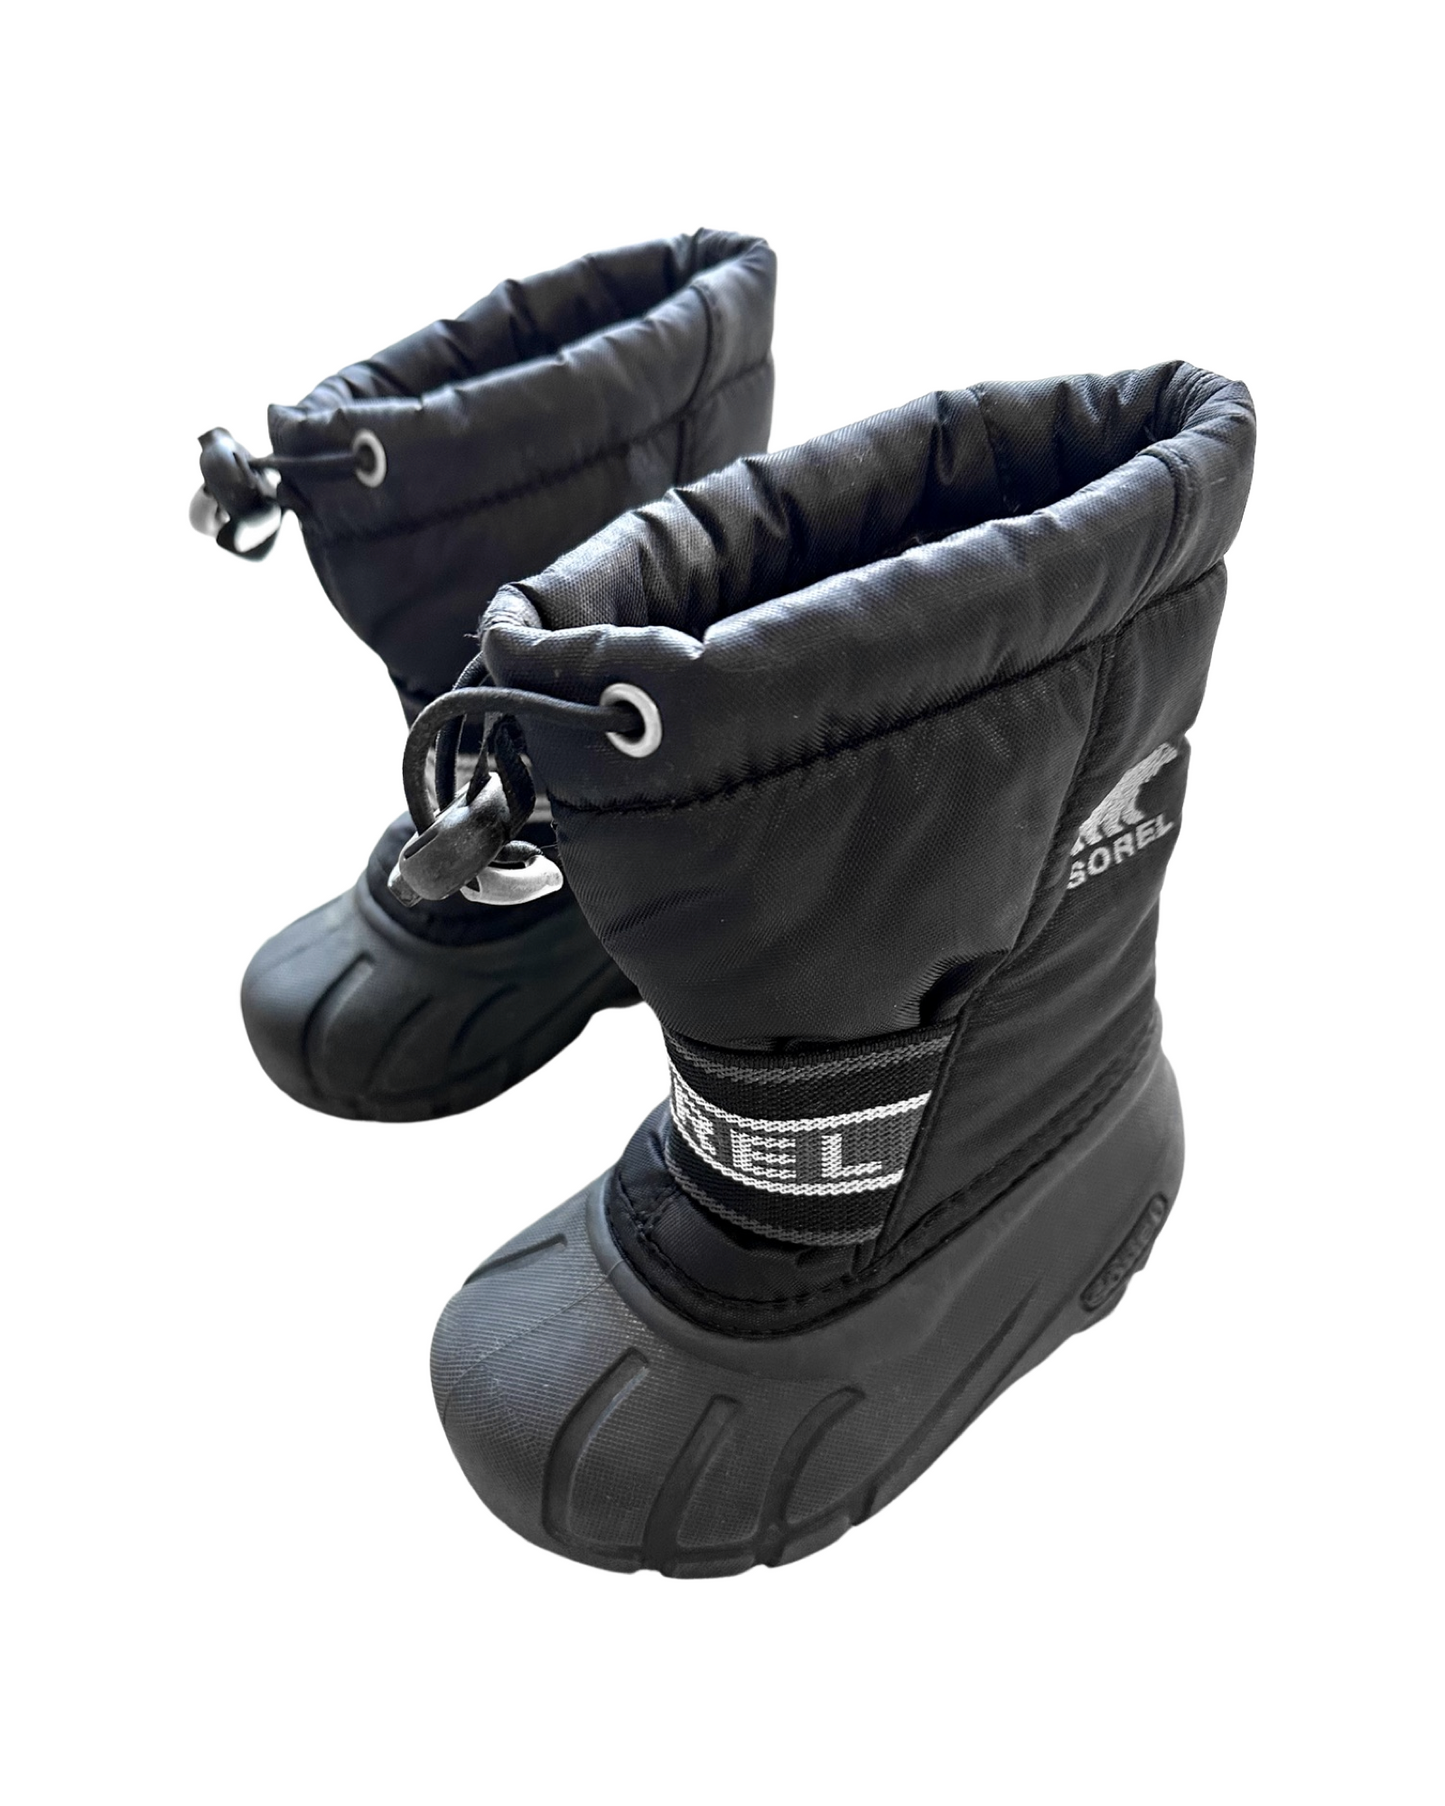 Sorel toddler snow boot in black (size UK5/EU22)